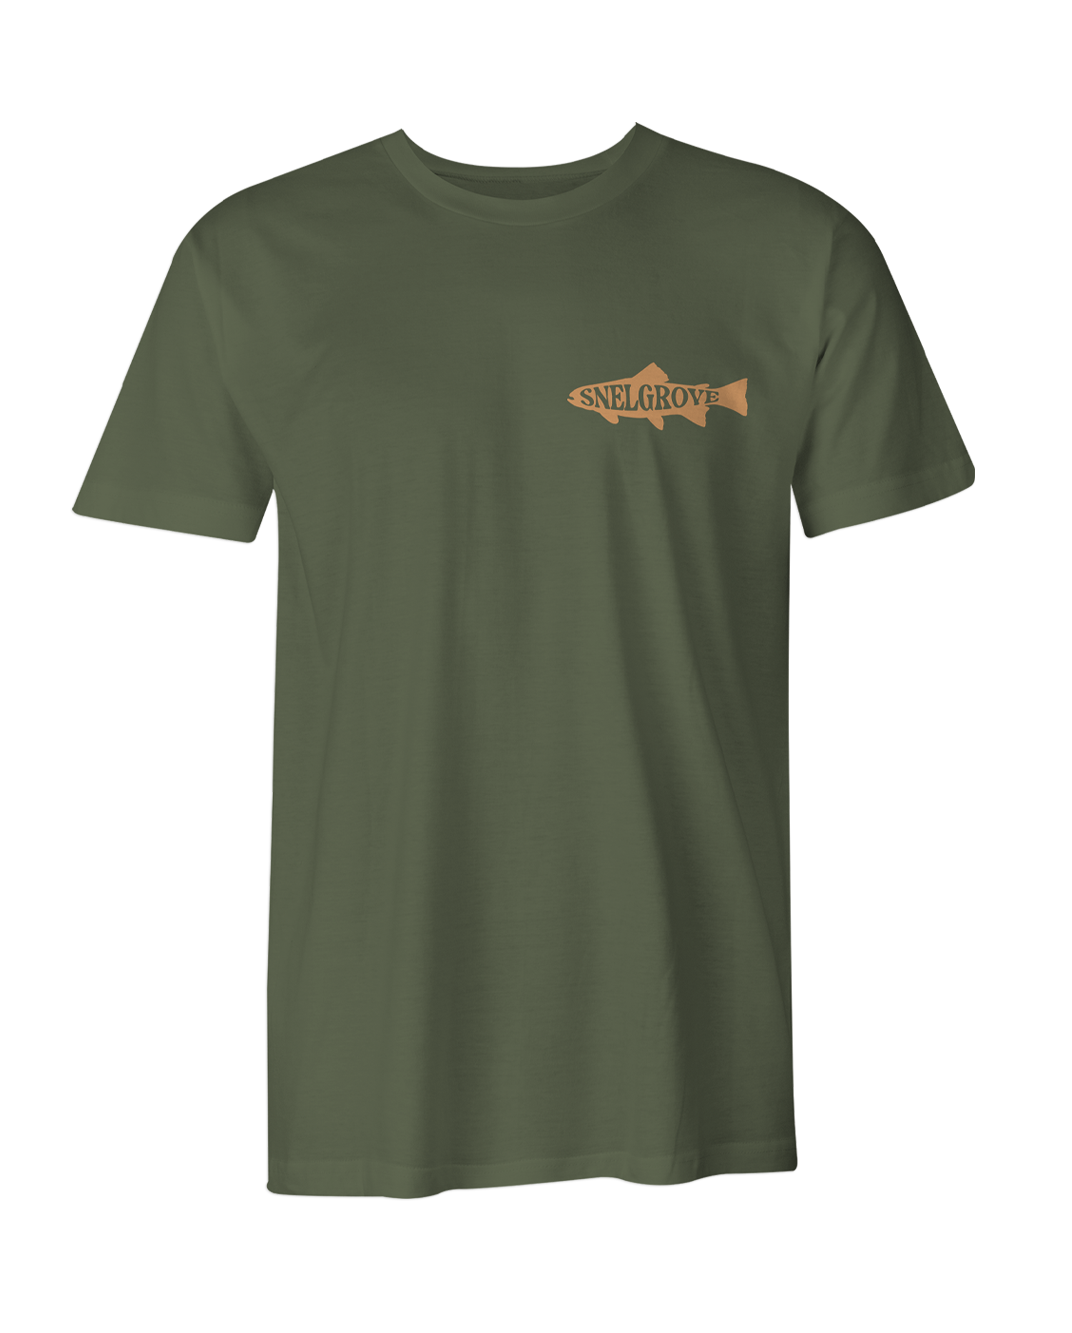 Al’s Magic Fishing Club T-Shirt